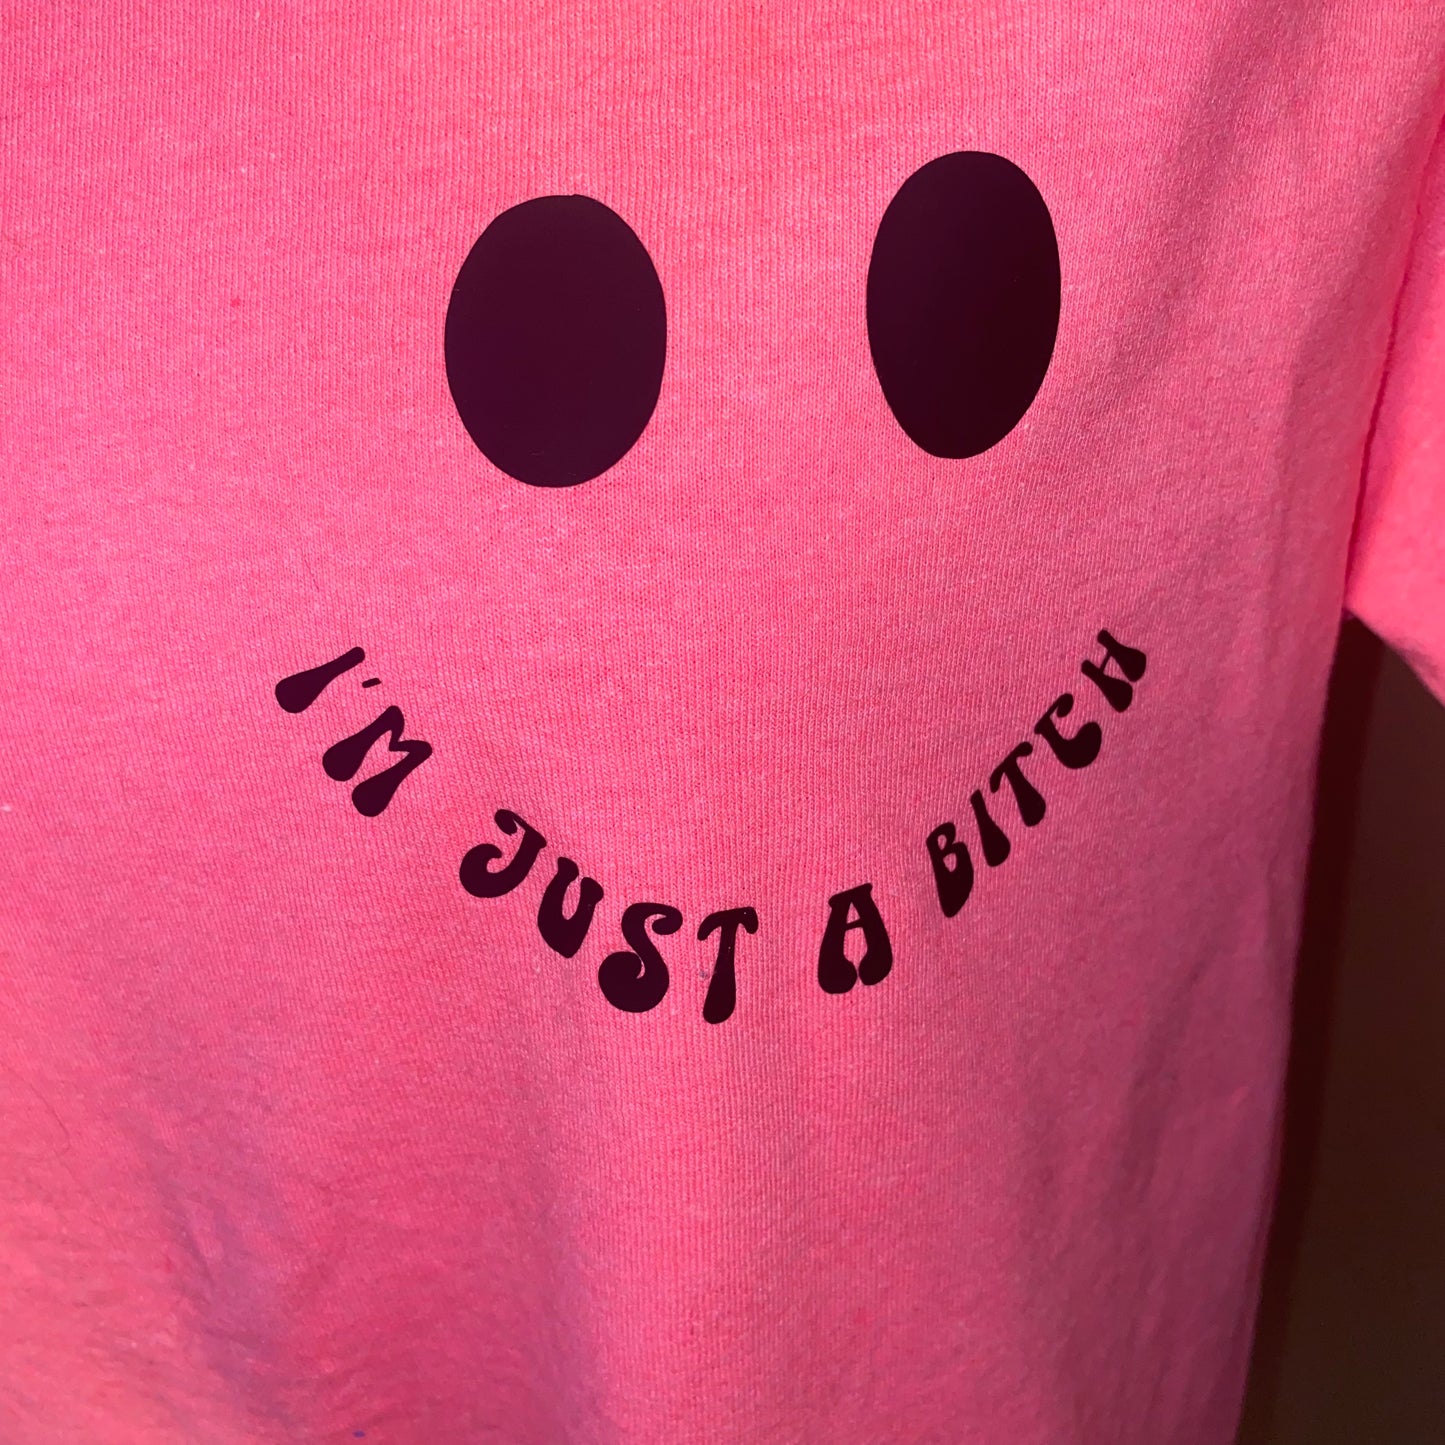 I’m just a bitch t-shirt